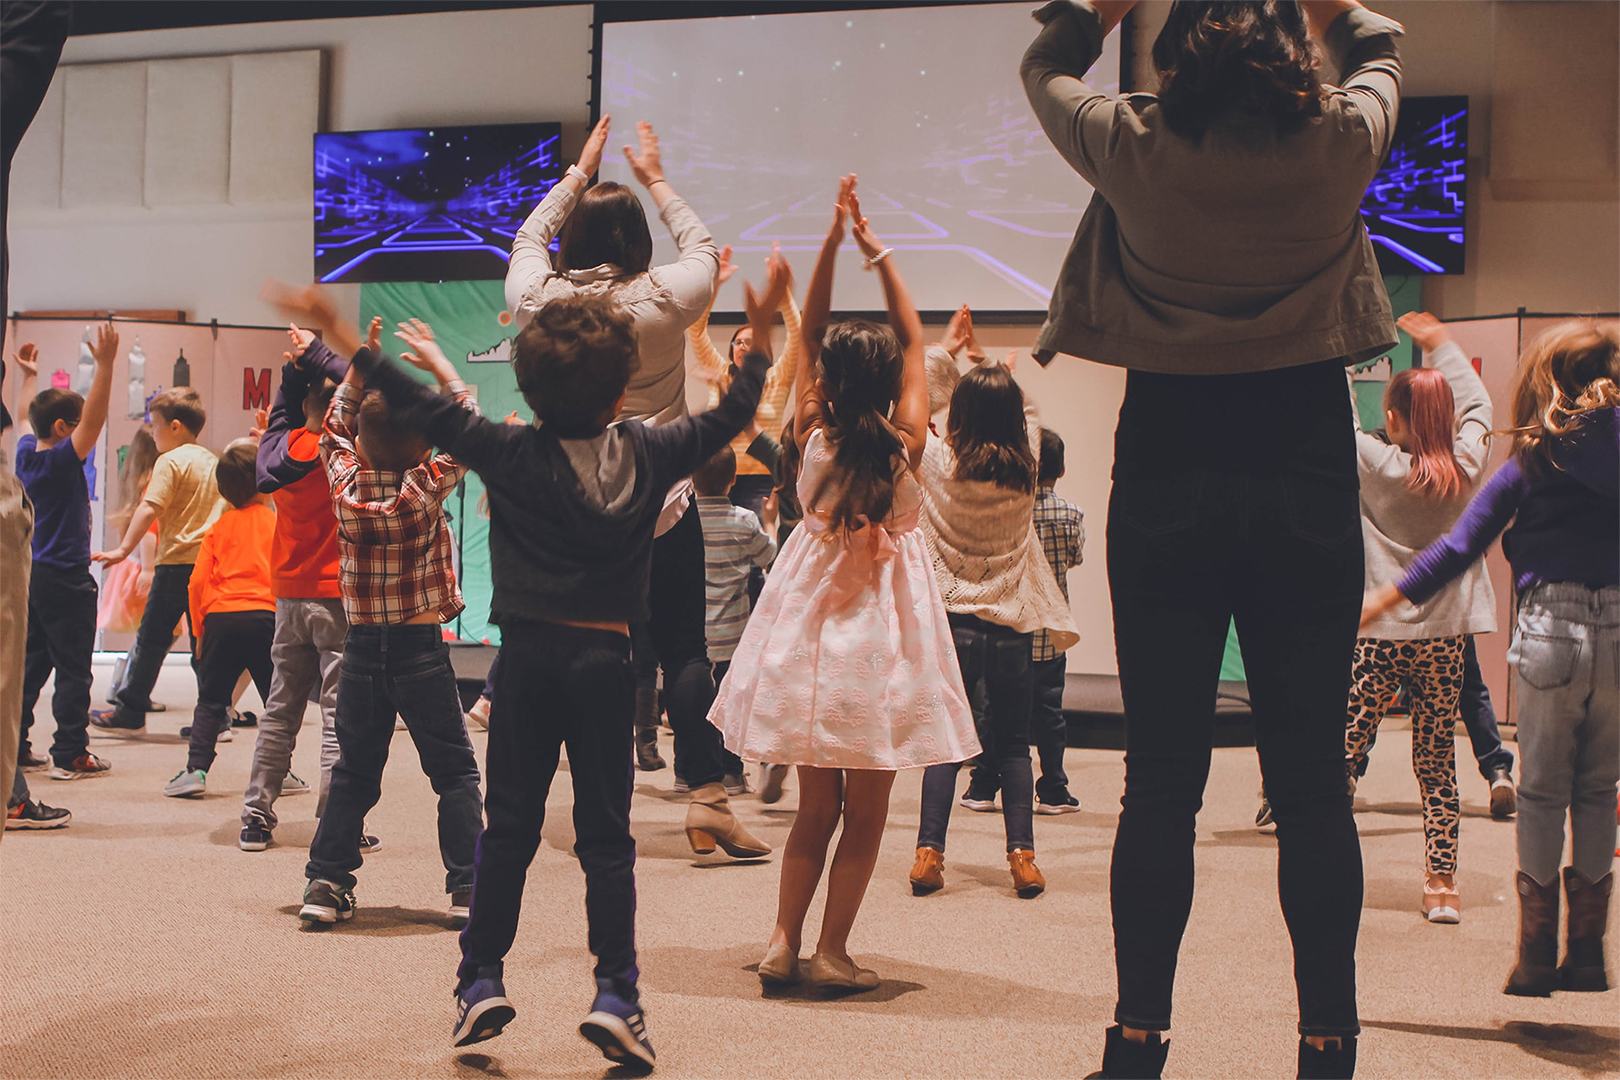 Children worshipping together.